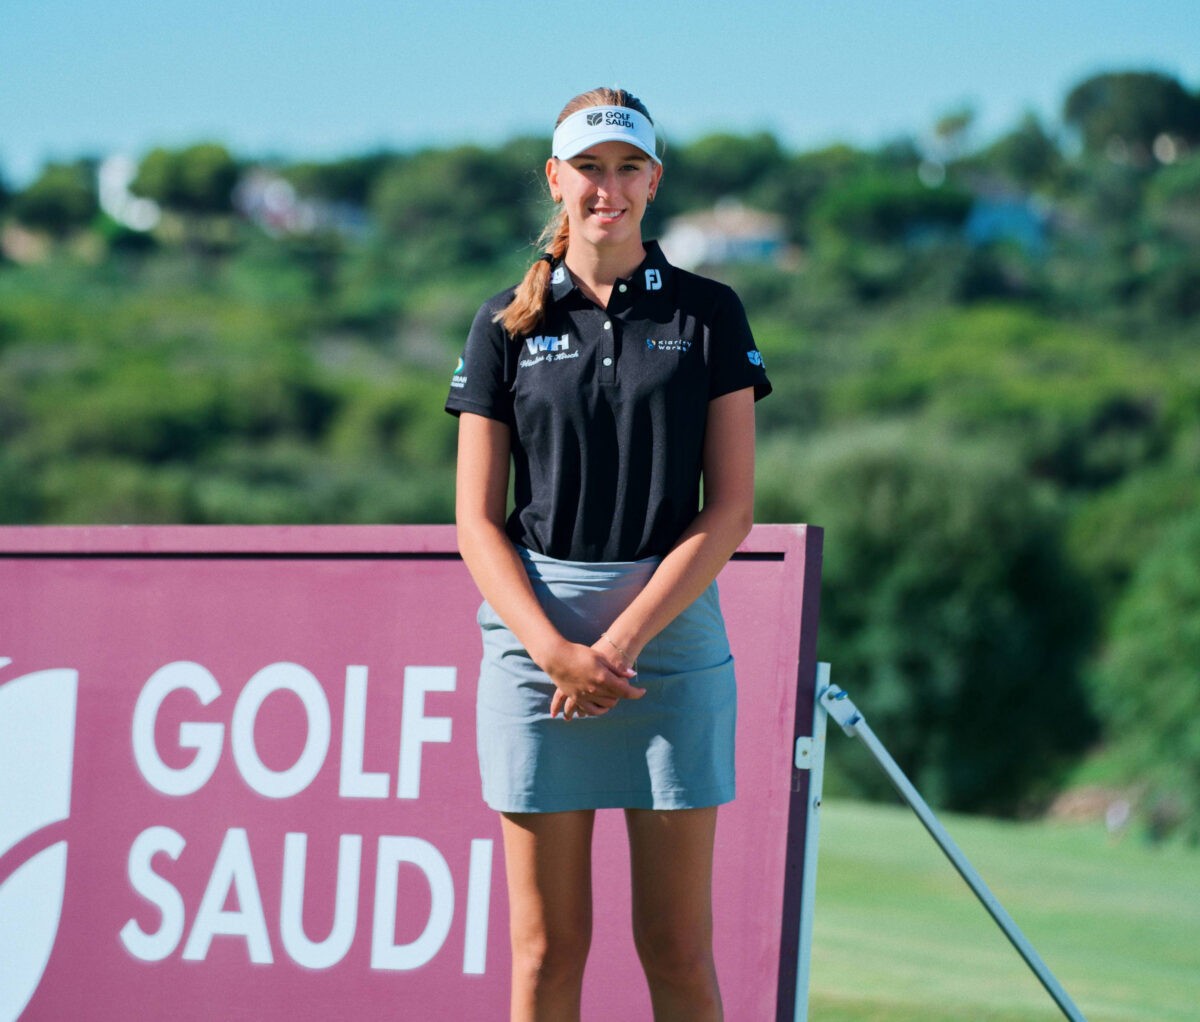 Chiara Noja wird Golf Saudi-Botschafterin￼